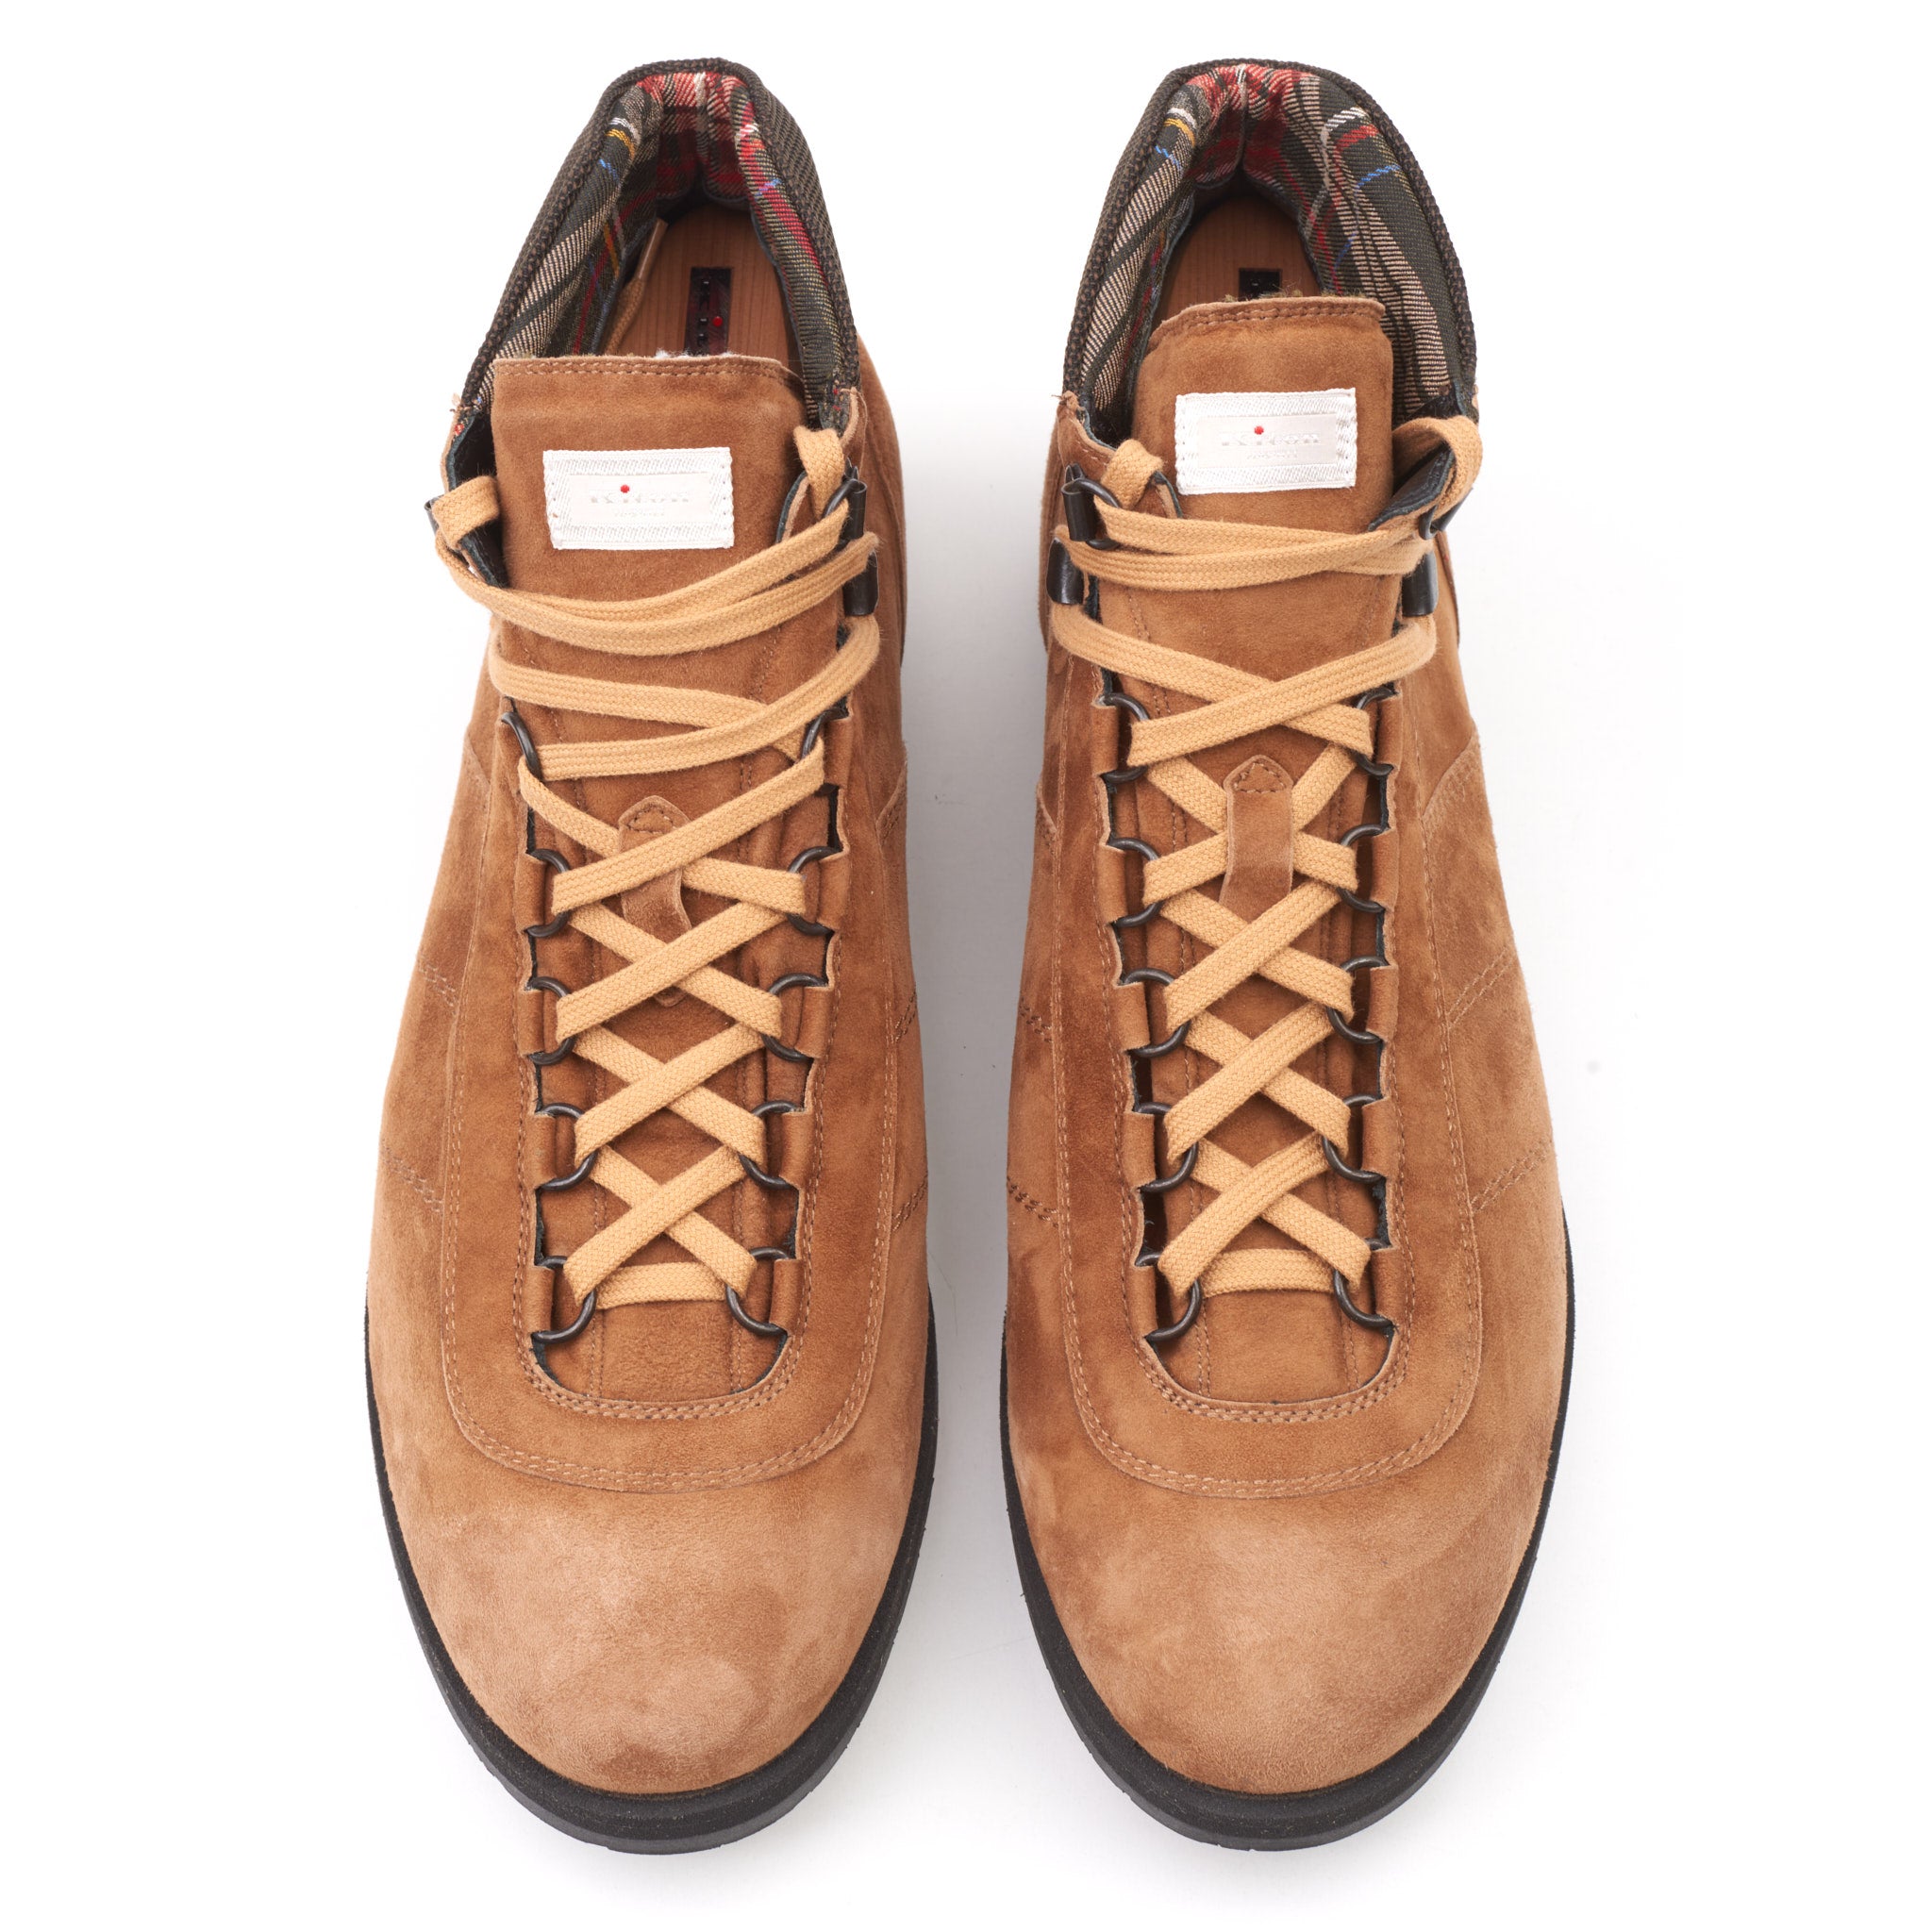 KITON Handmade Tan Goatskin Suede Leather Hiking Boots Shoes US 8.5 NEW